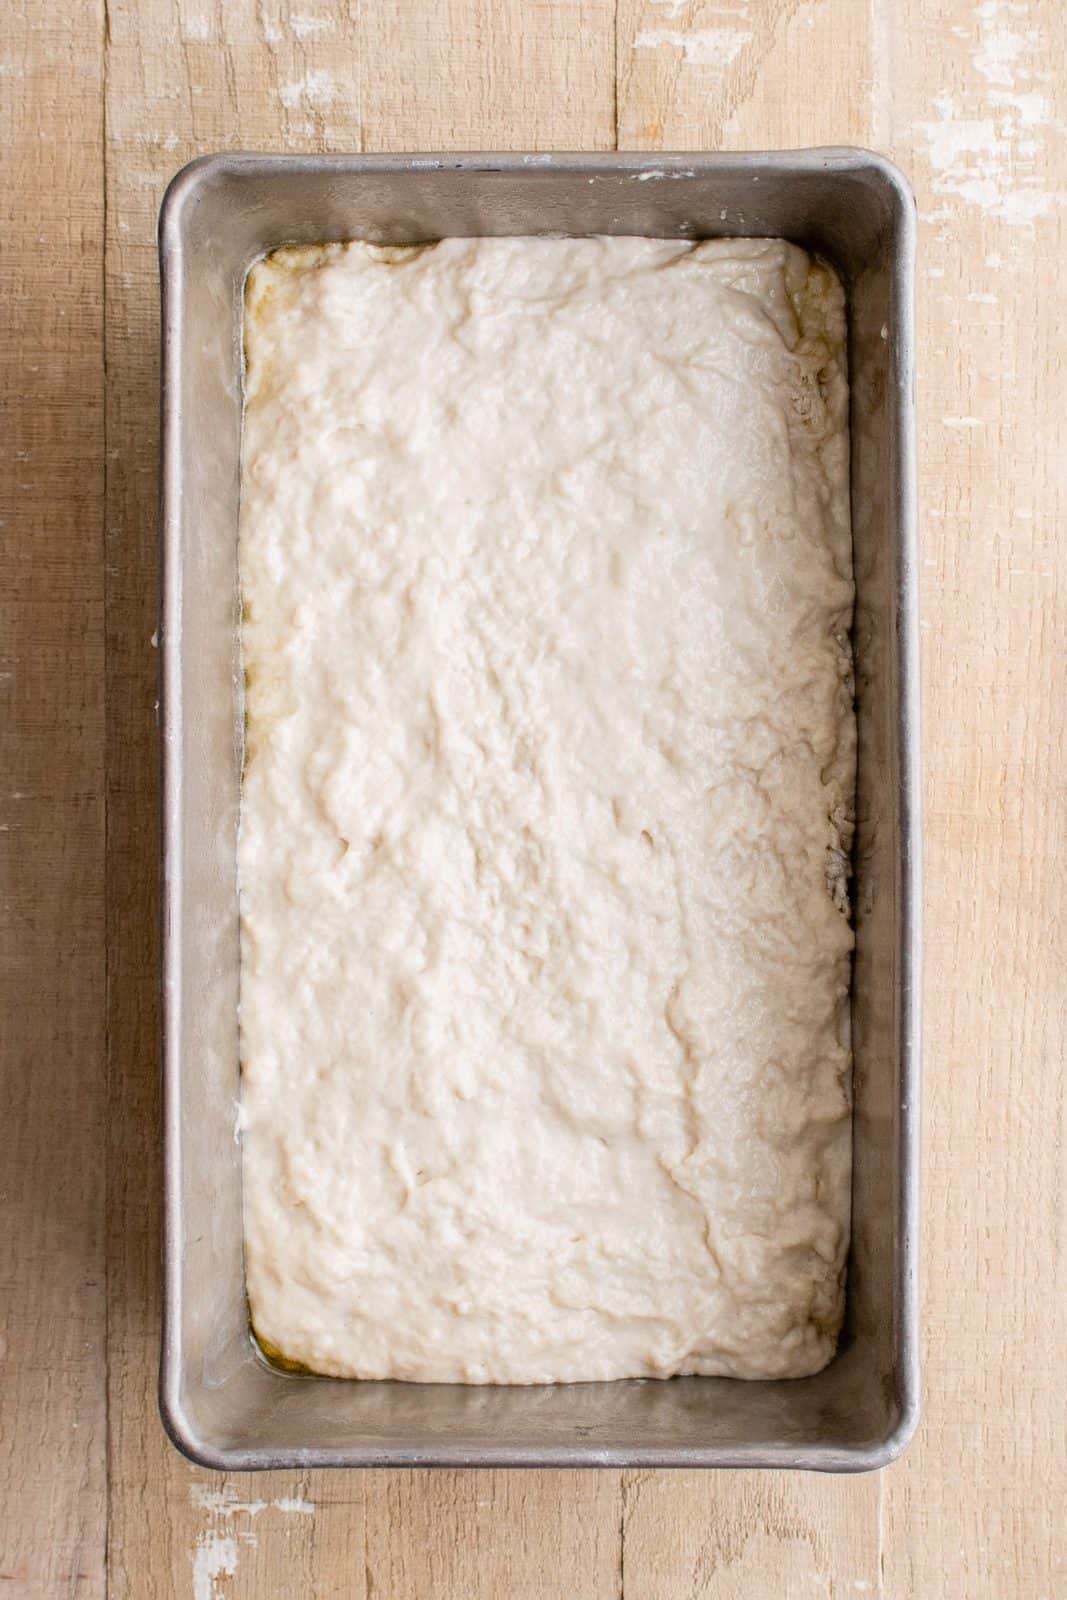 Batter spread in loaf pan.